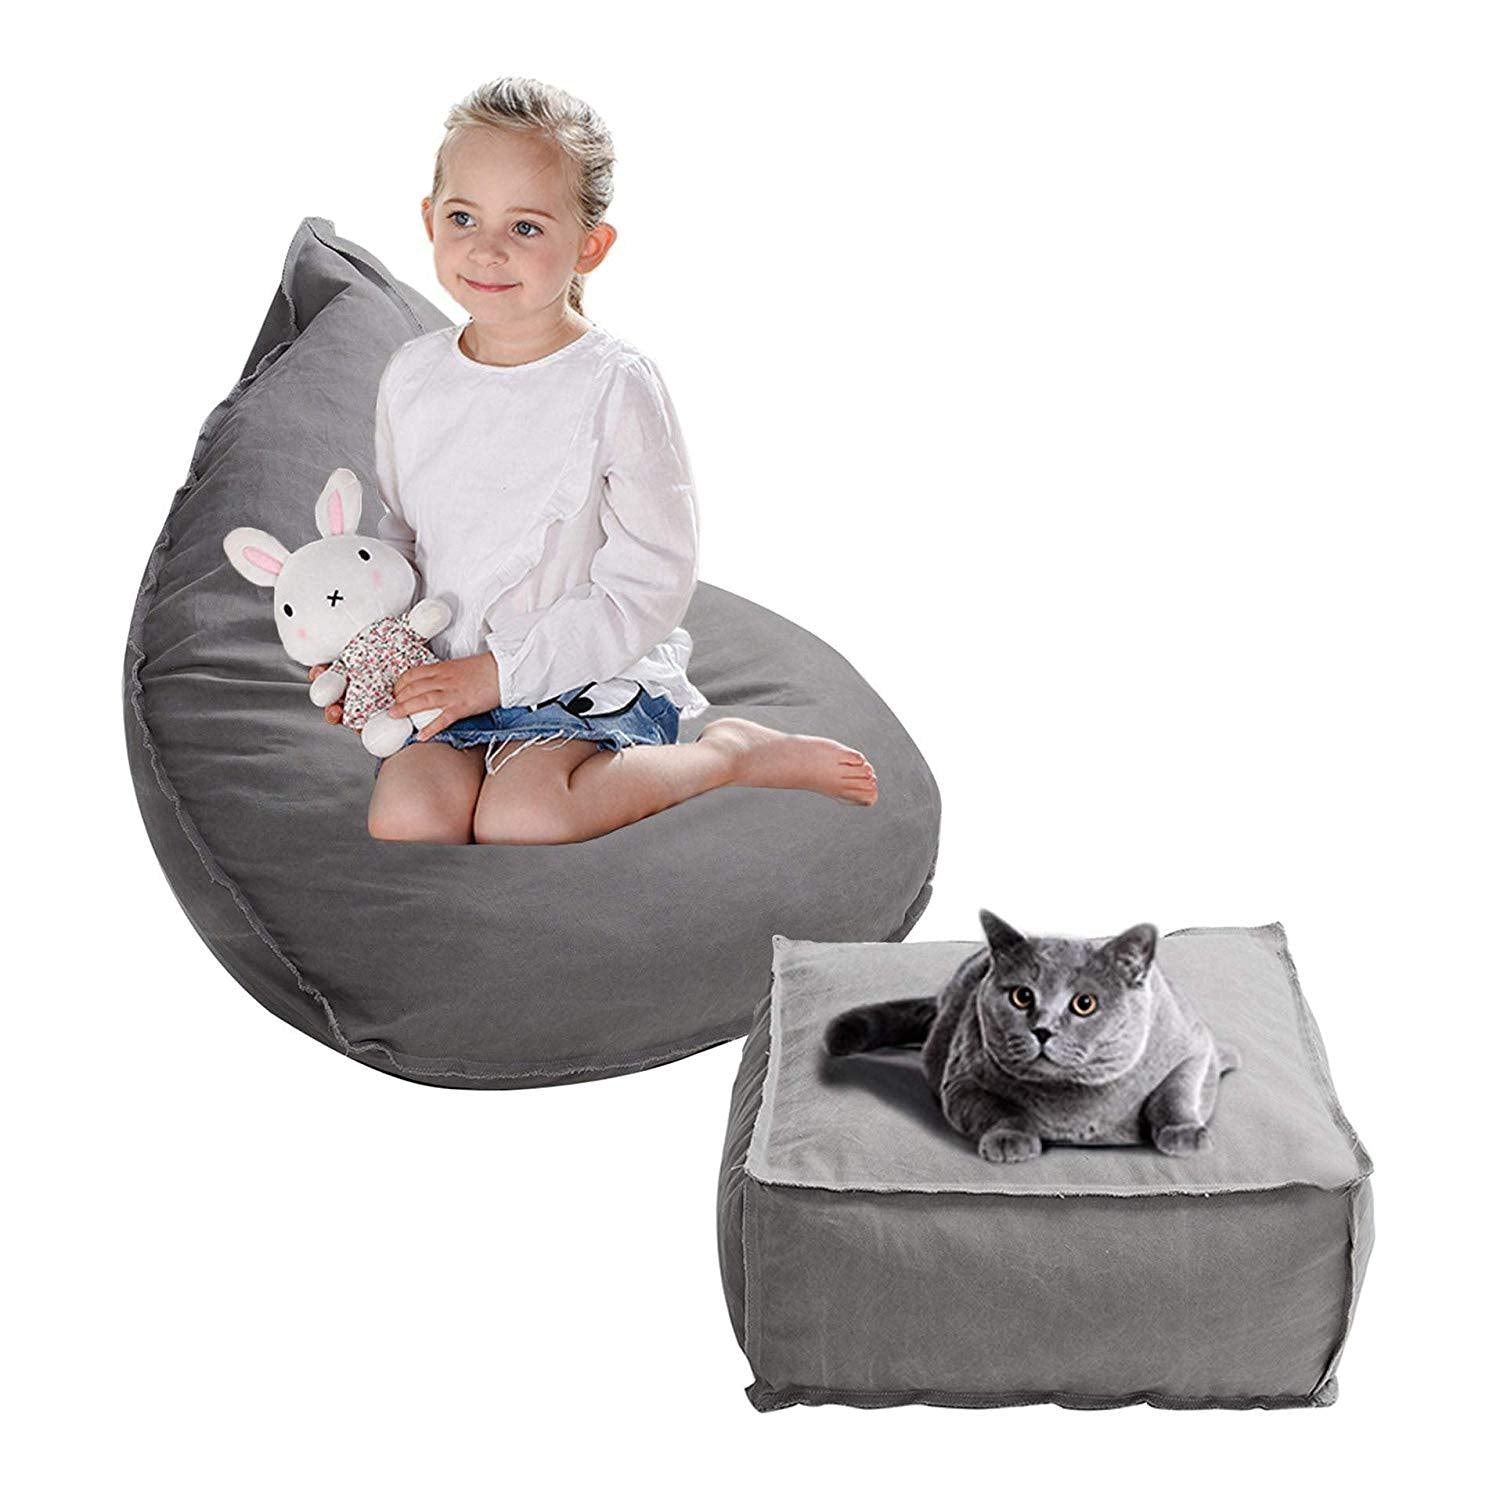 Bosonshop 3 Feet Kids Bean Bag Chair Sofa Seat with Foot Pad for Children